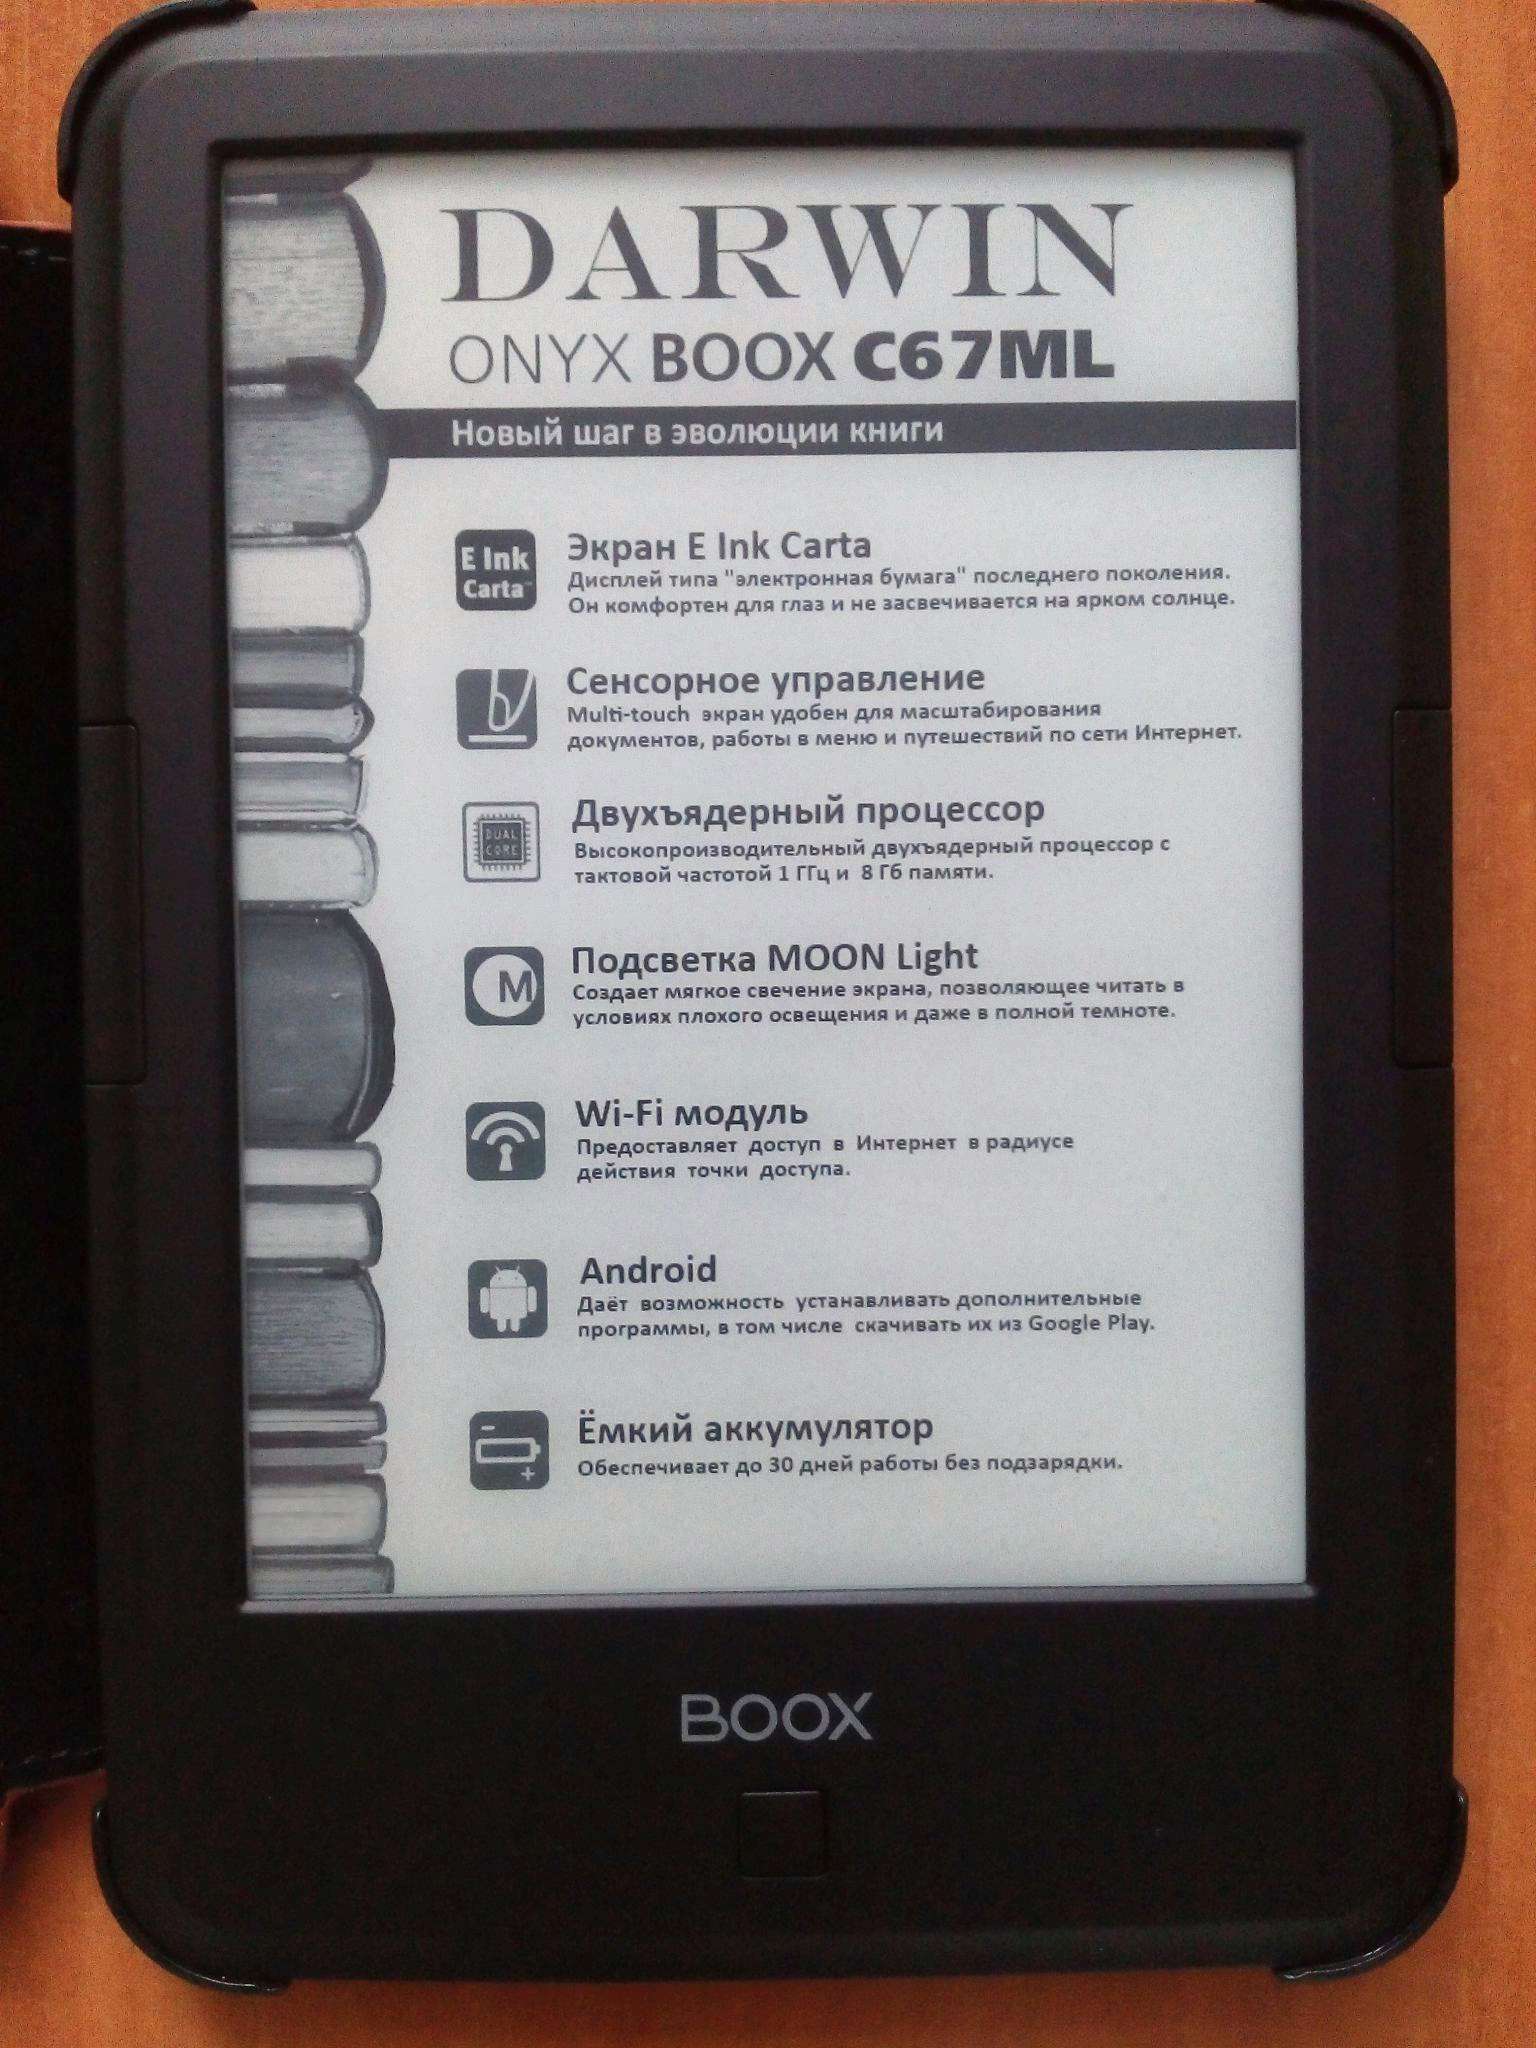 Электронные книги 6 onyx. Onyx BOOX c67ml Darwin 8 ГБ. Электронная книга Дарвин Onyx book c67ml. Onix BOOX c67ml Darwin Black. Onyx BOOX Nova Air c.